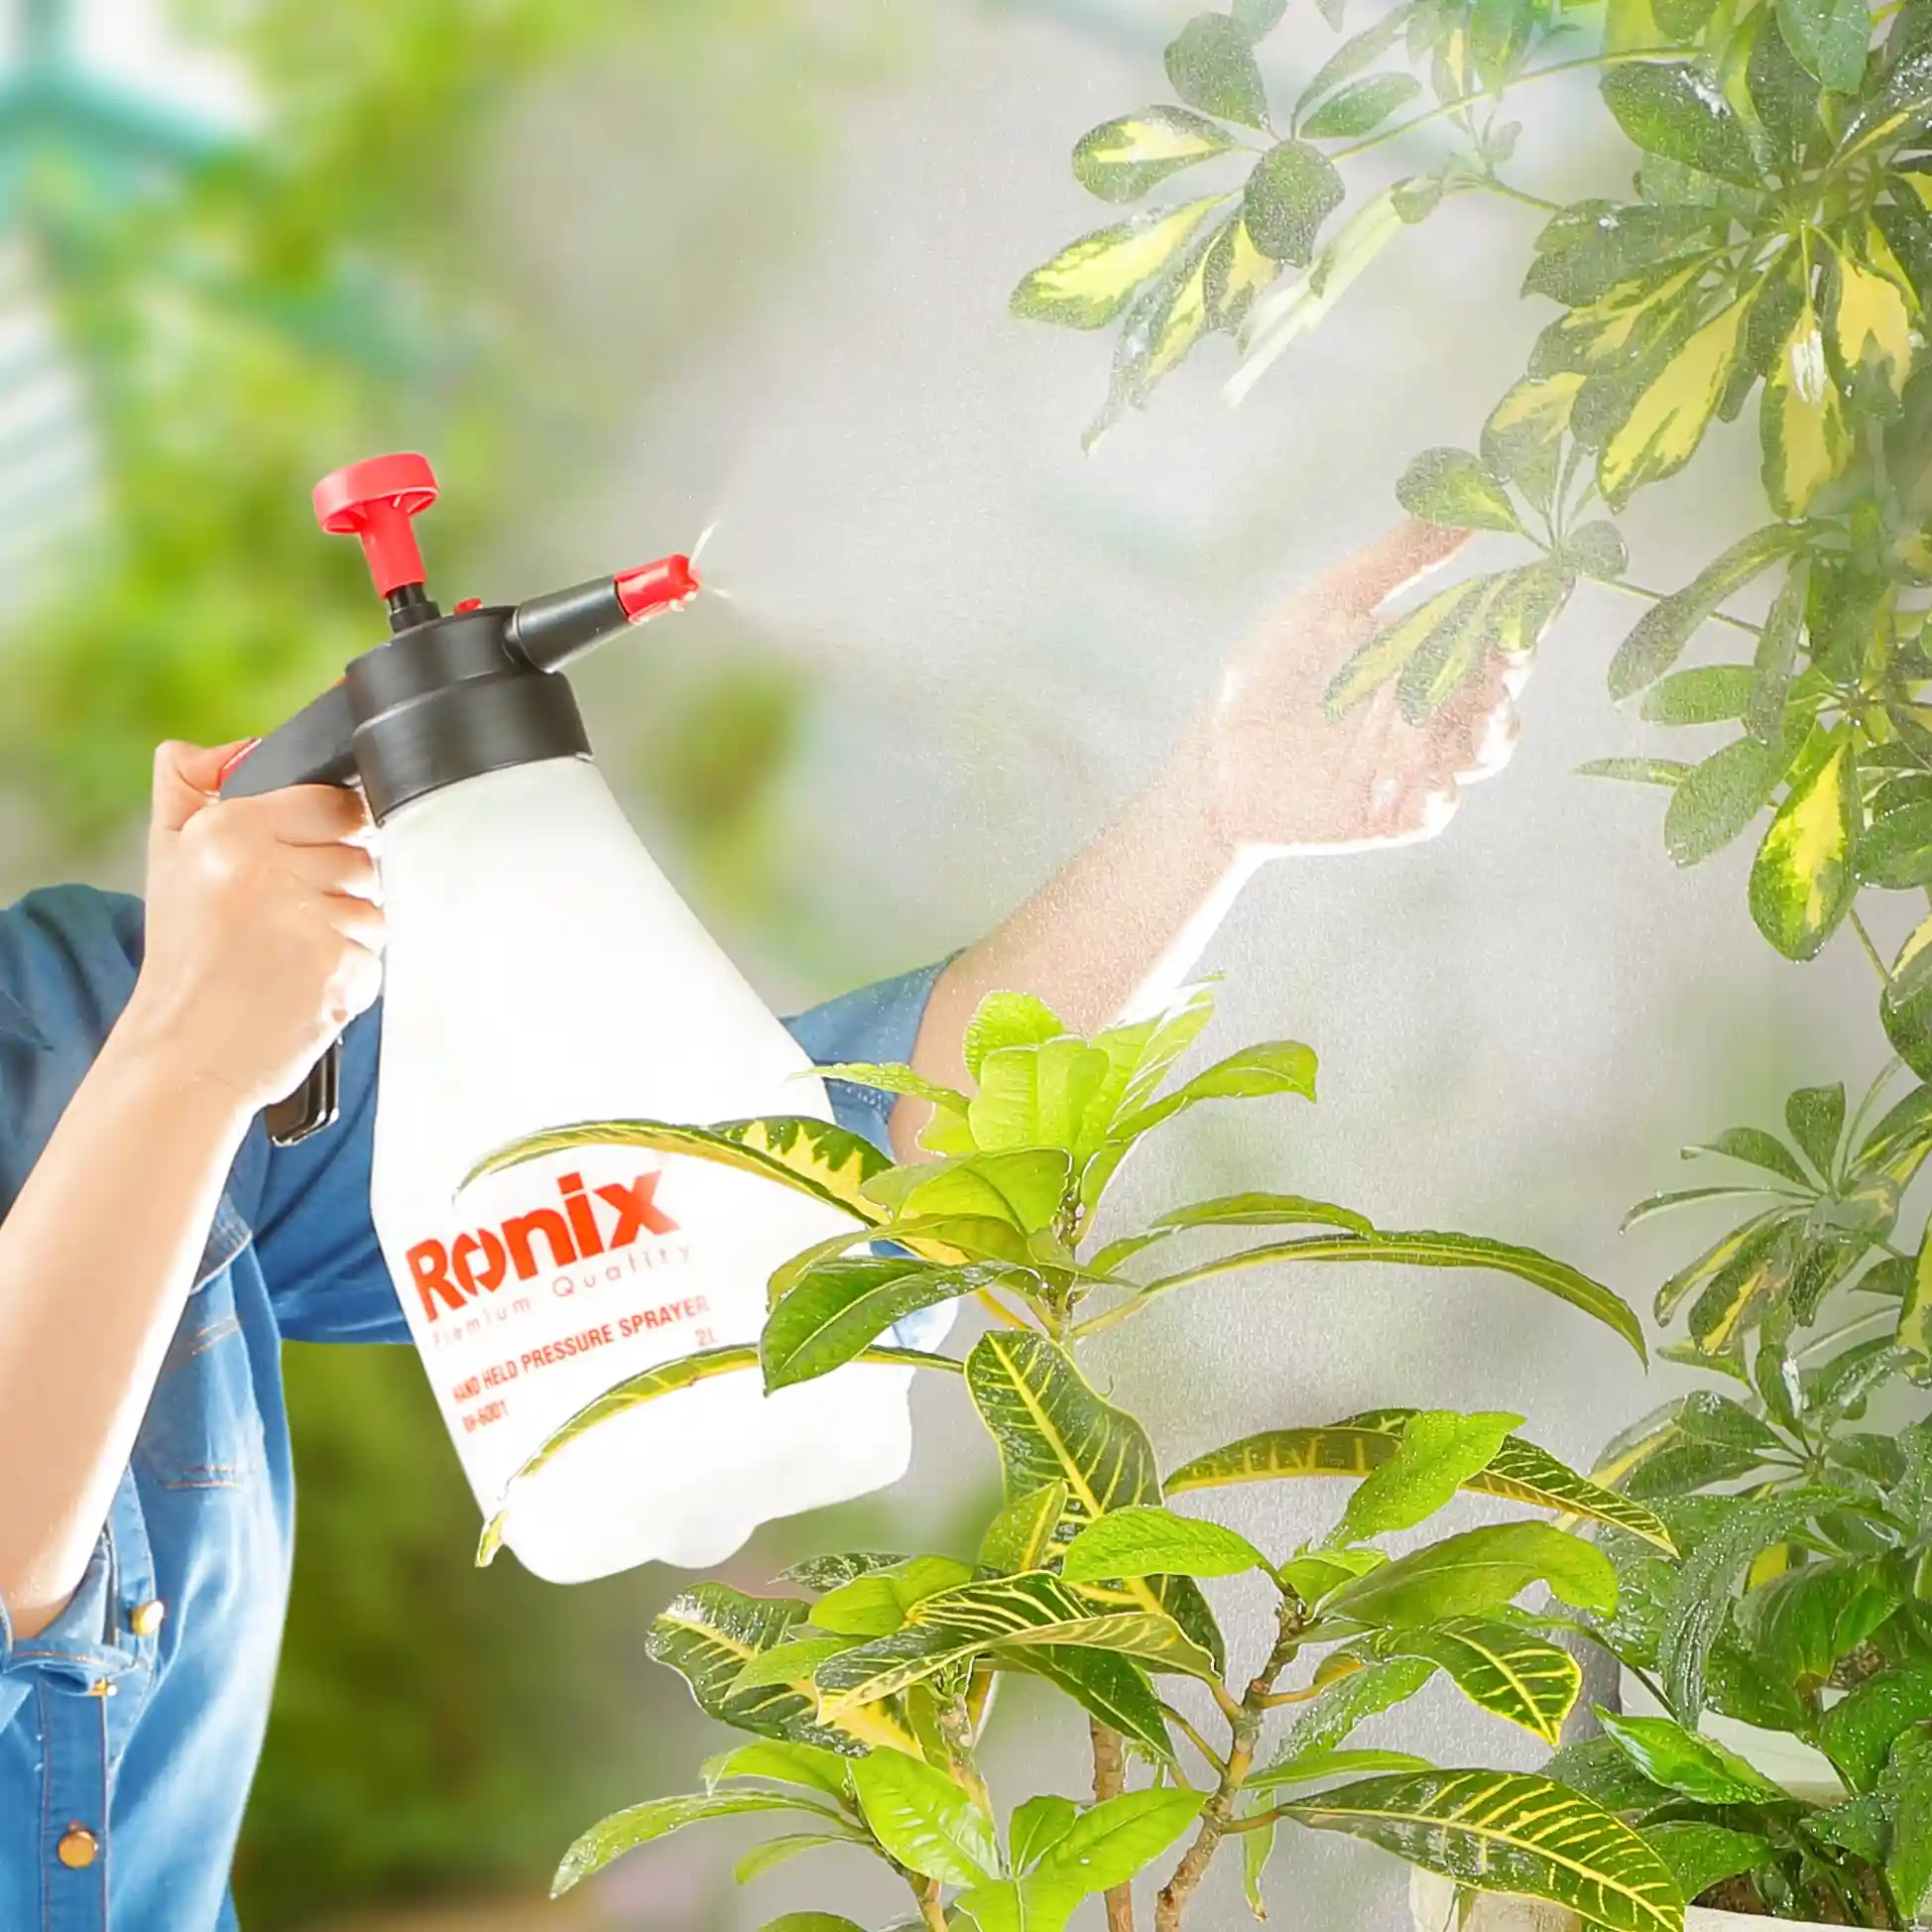 misting plants using a Ronix sprayer